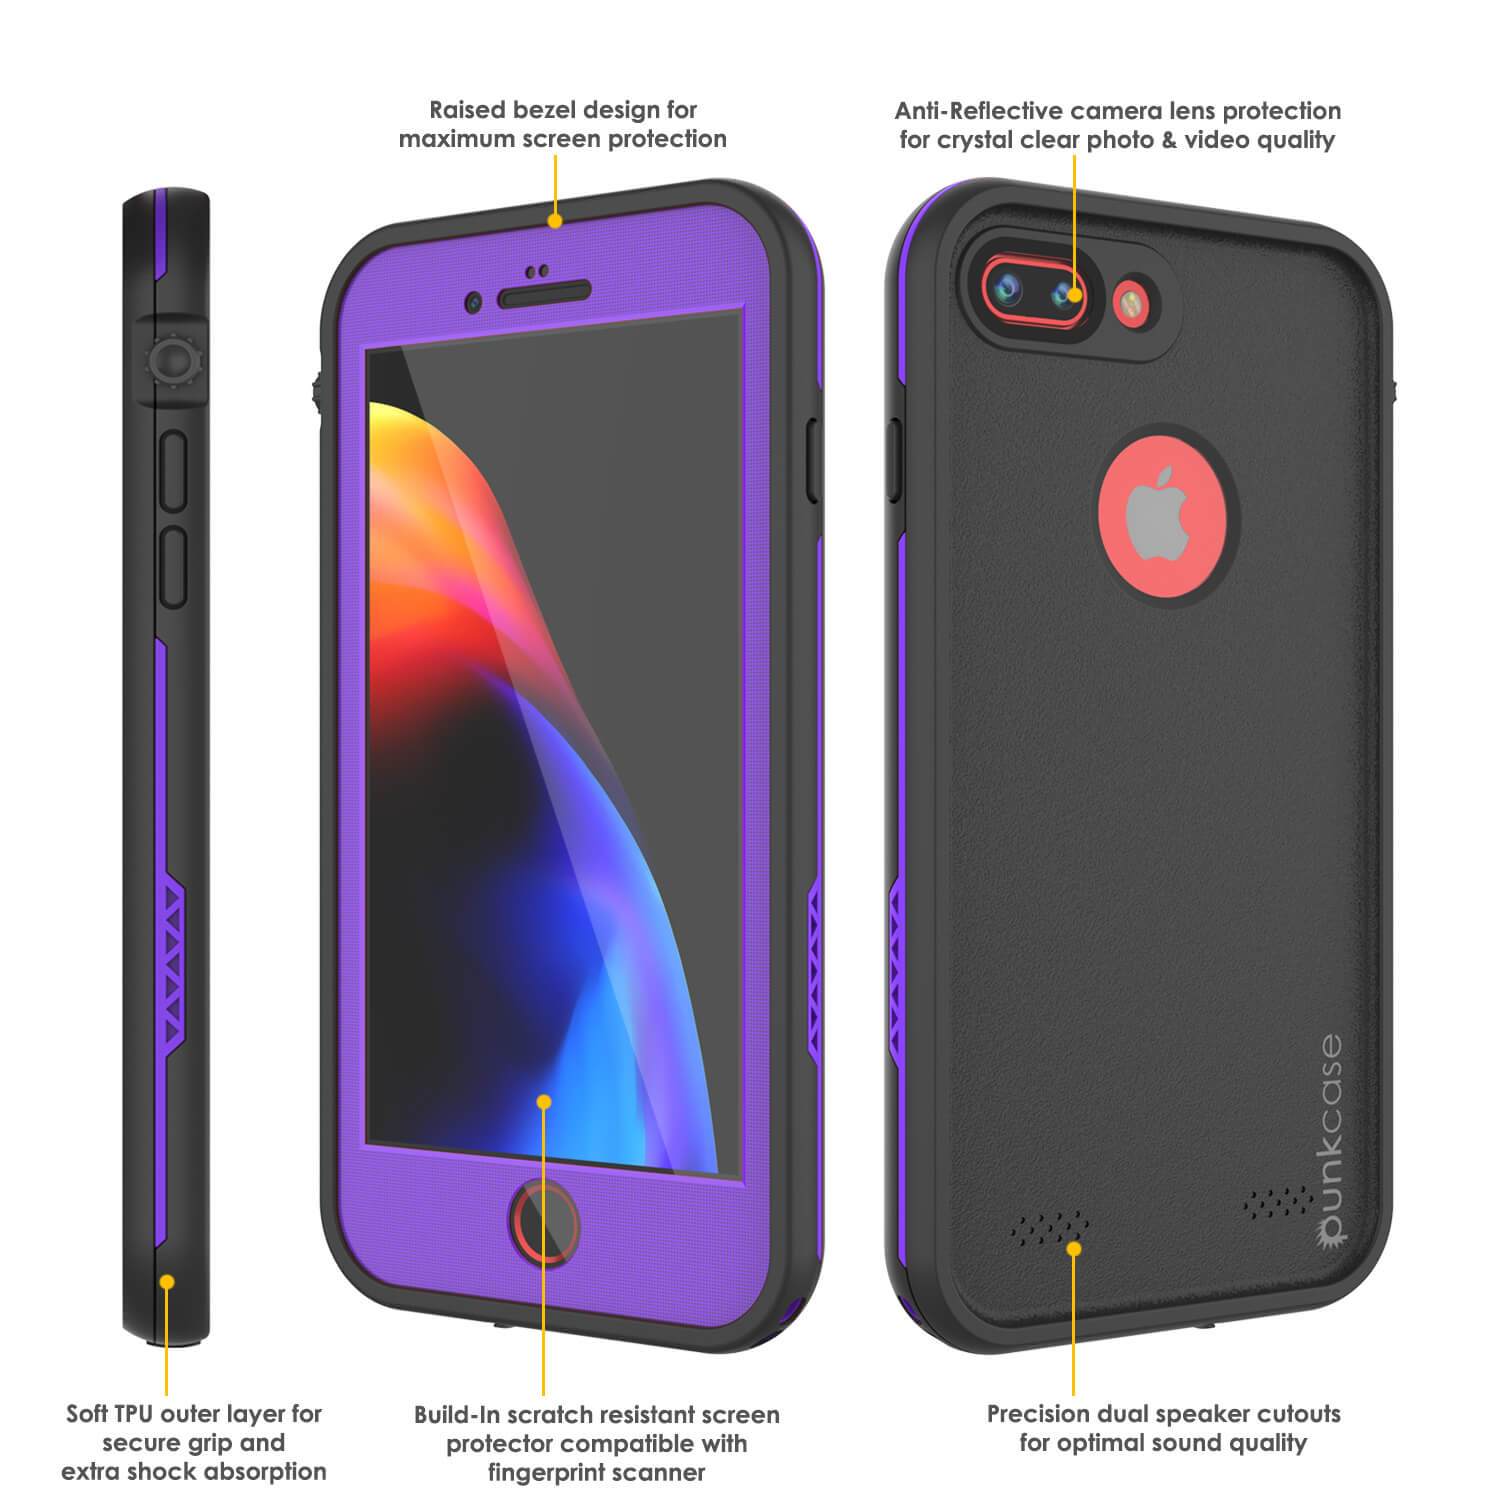 iPhone 7+ Plus Waterproof Case, Punkcase SpikeStar Purple Series | Thin Fit 6.6ft Underwater IP68